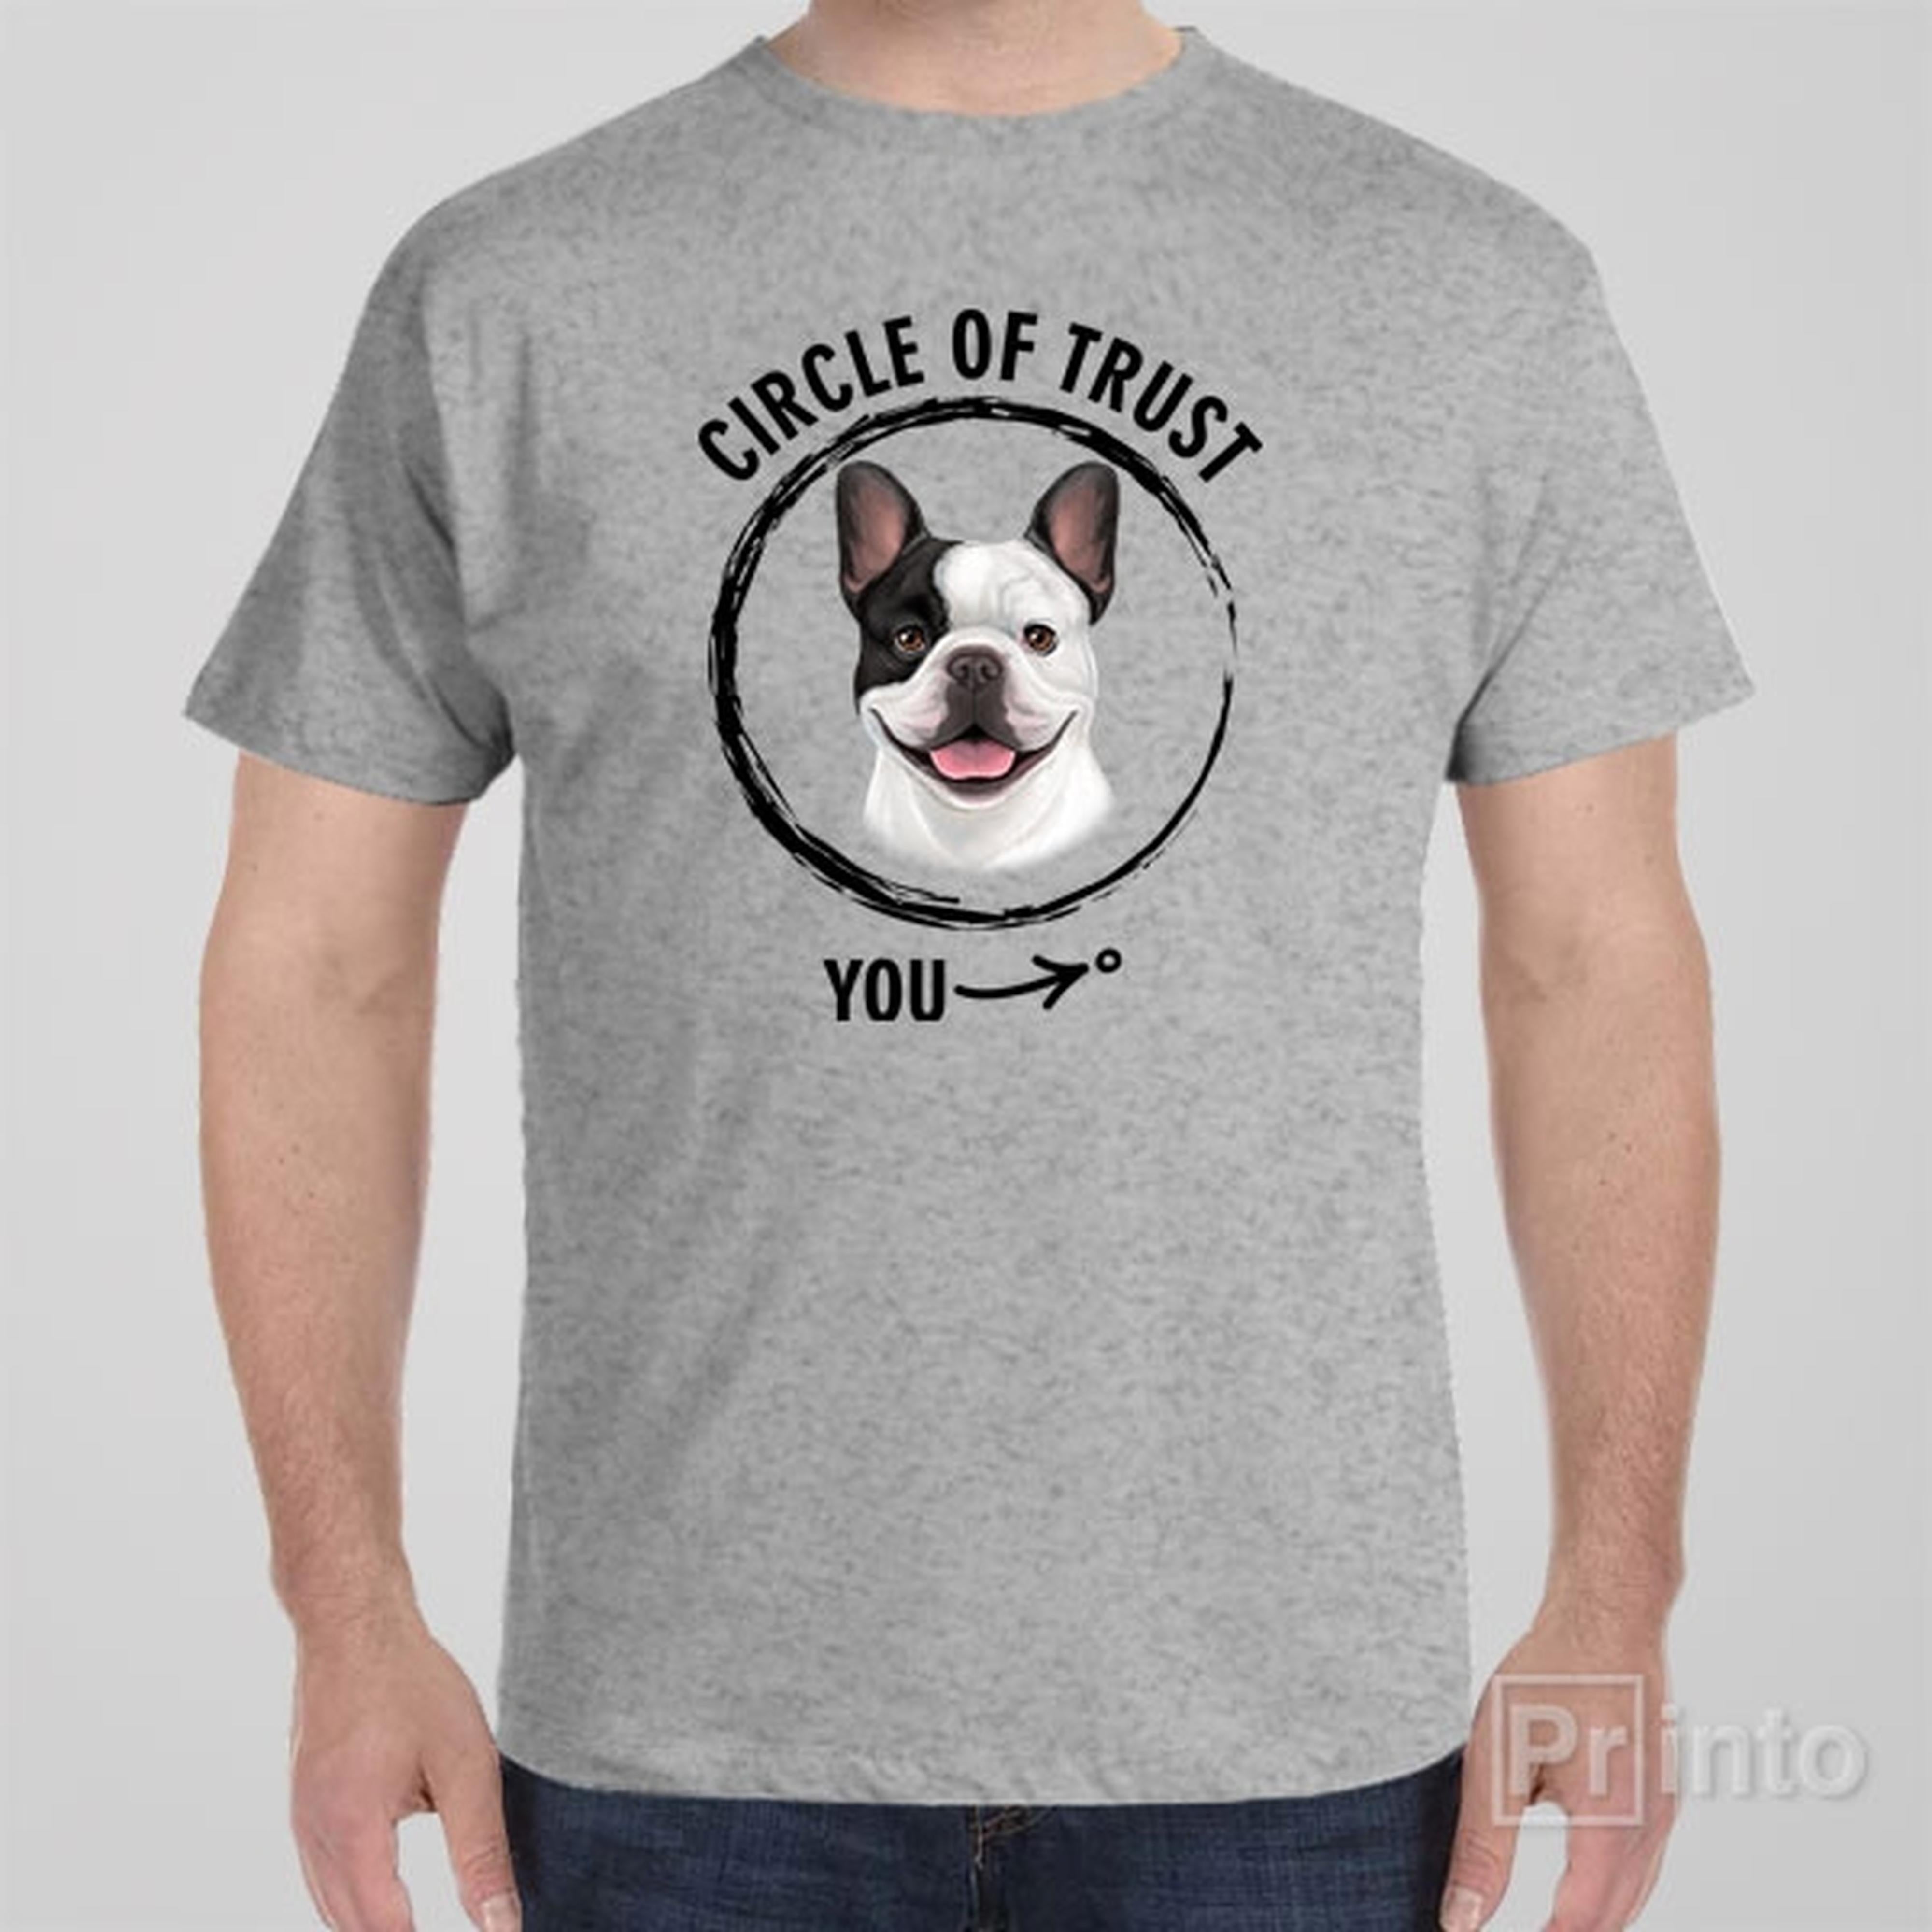 circle-of-trust-french-bulldog-t-shirt